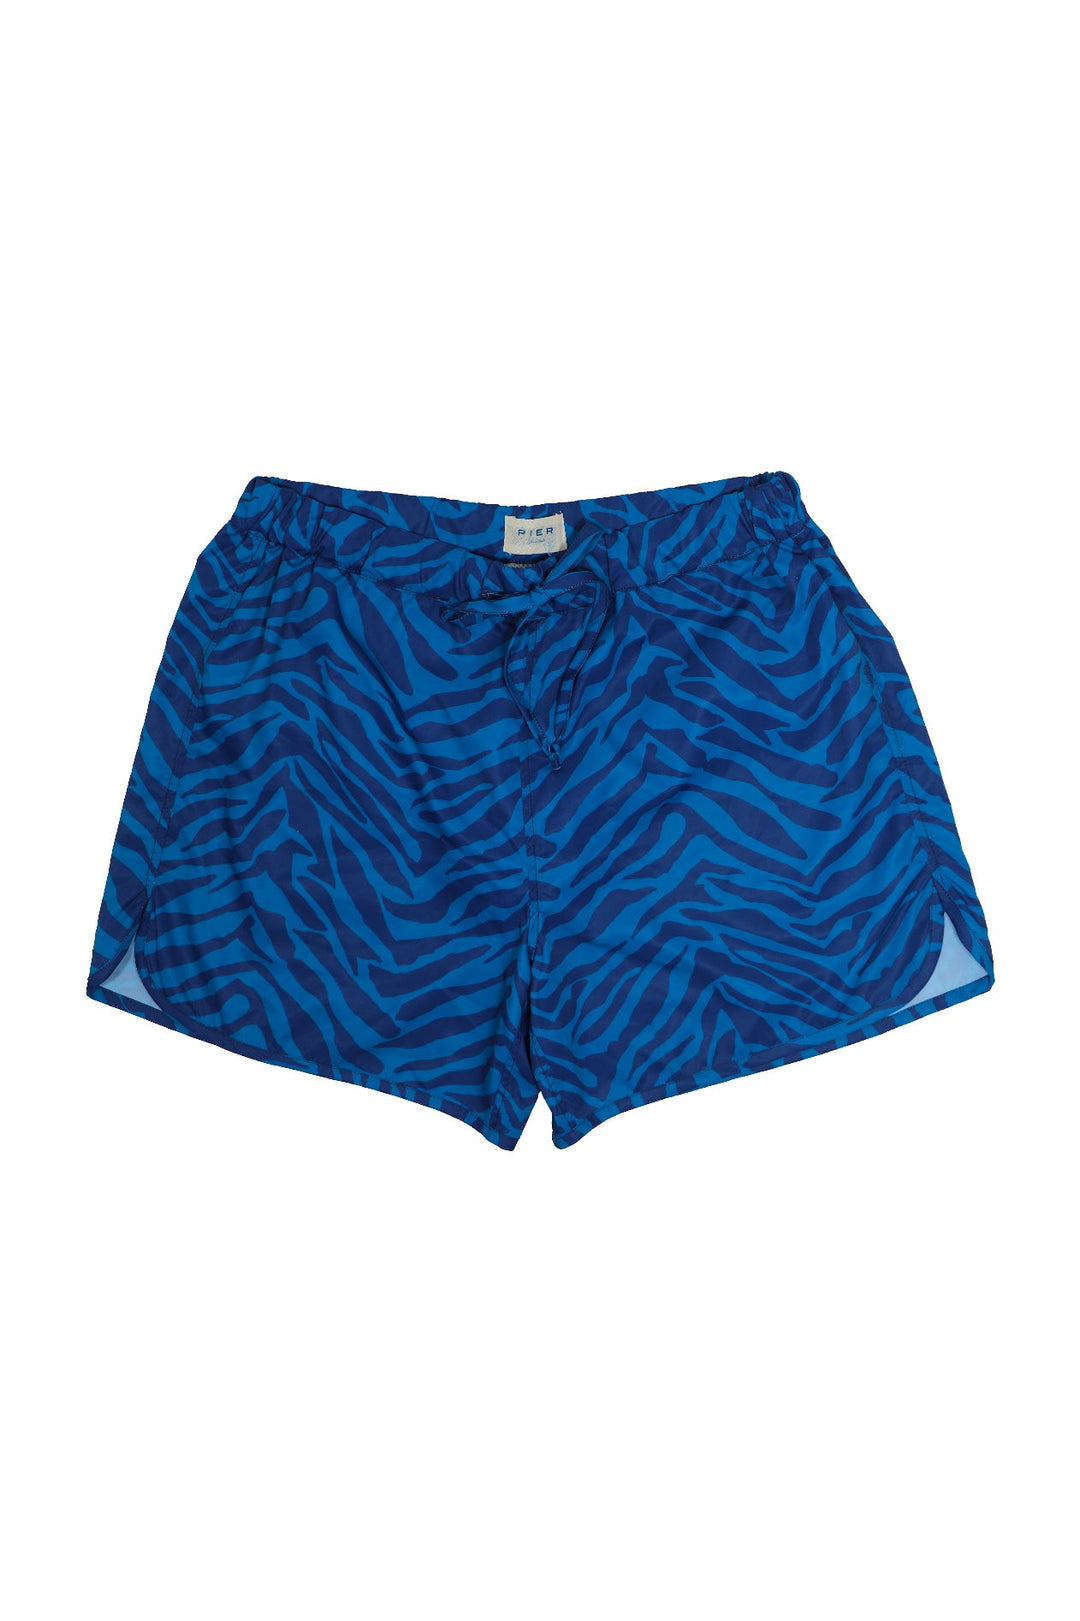 Blue and black zebra print men's swim trunks